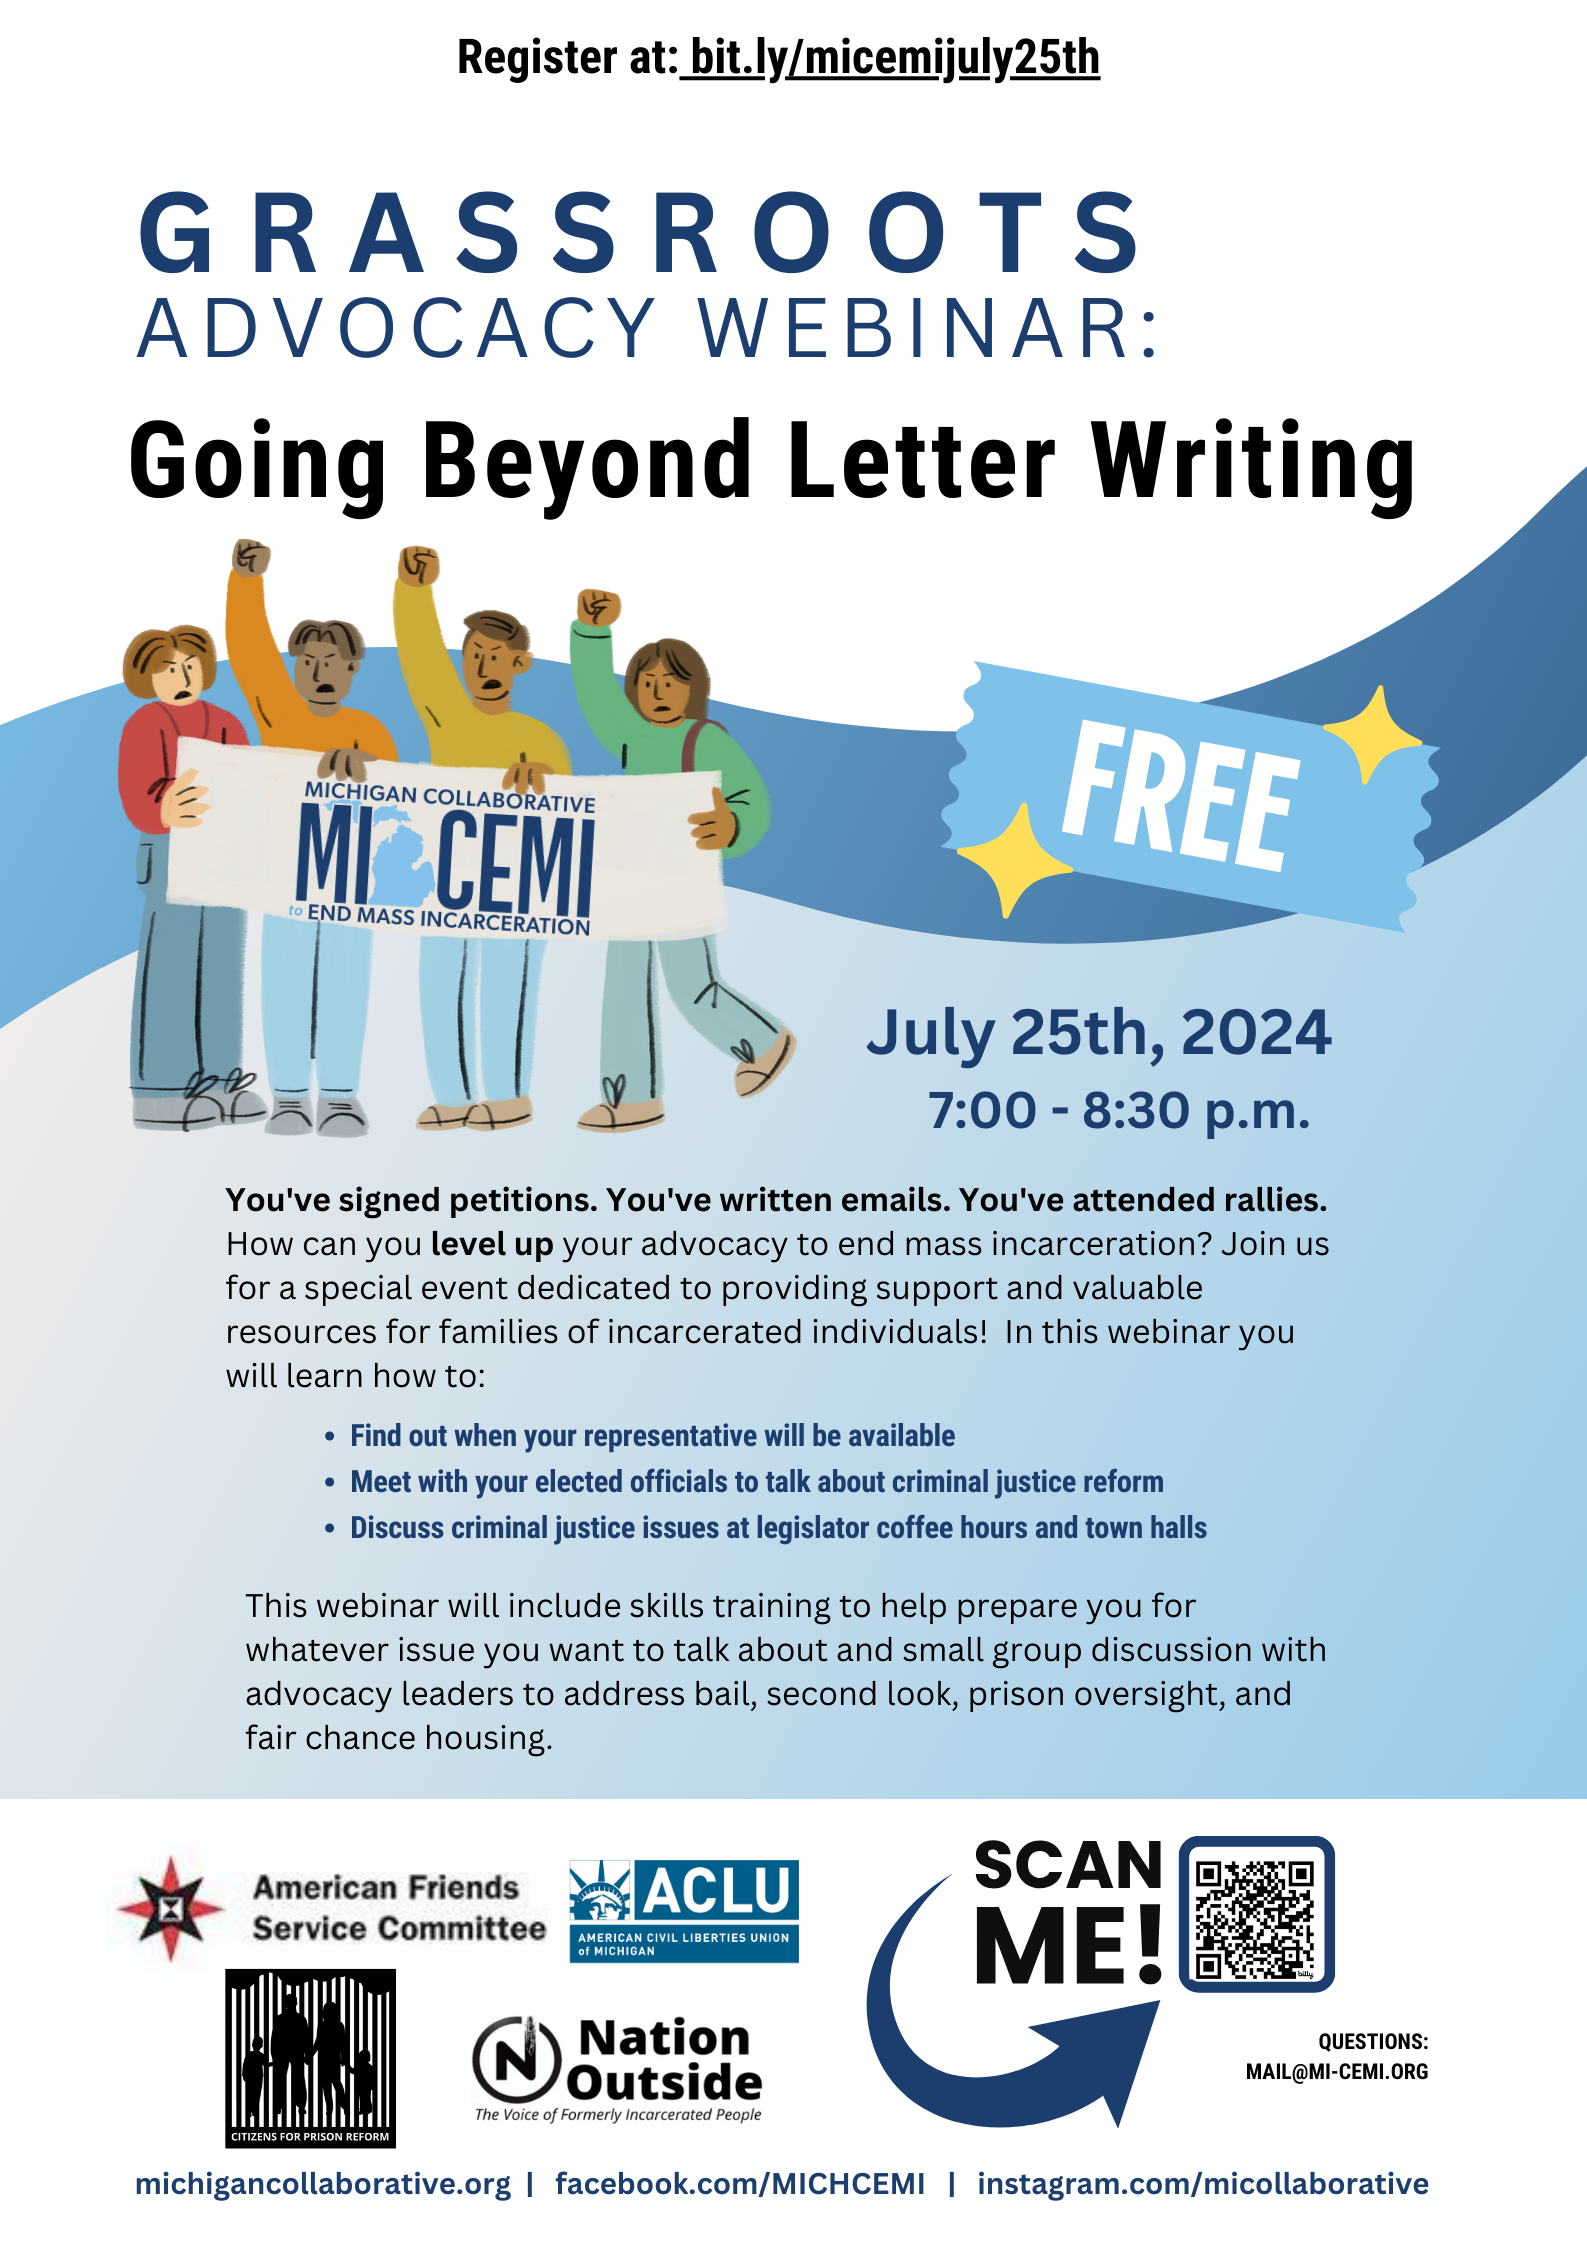 MI-CEMI Grassroots Advocacy Webinar: Beyond Letter Writing